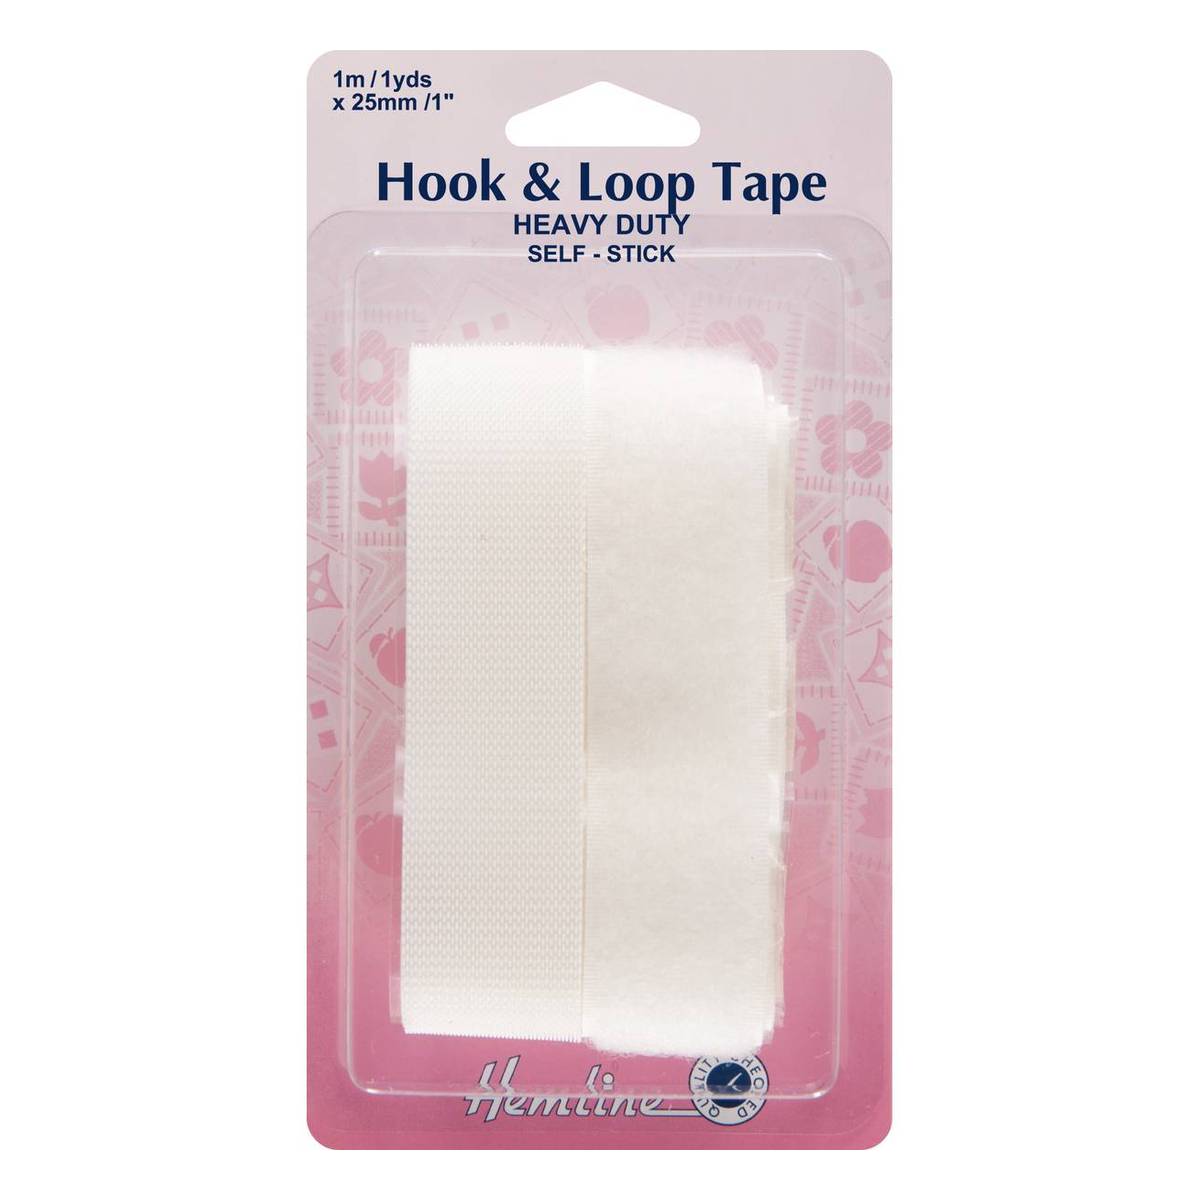 VELCRO Brand - VELCRO® Brand Heavy-Duty Stick On Tape 50mm x 5m White